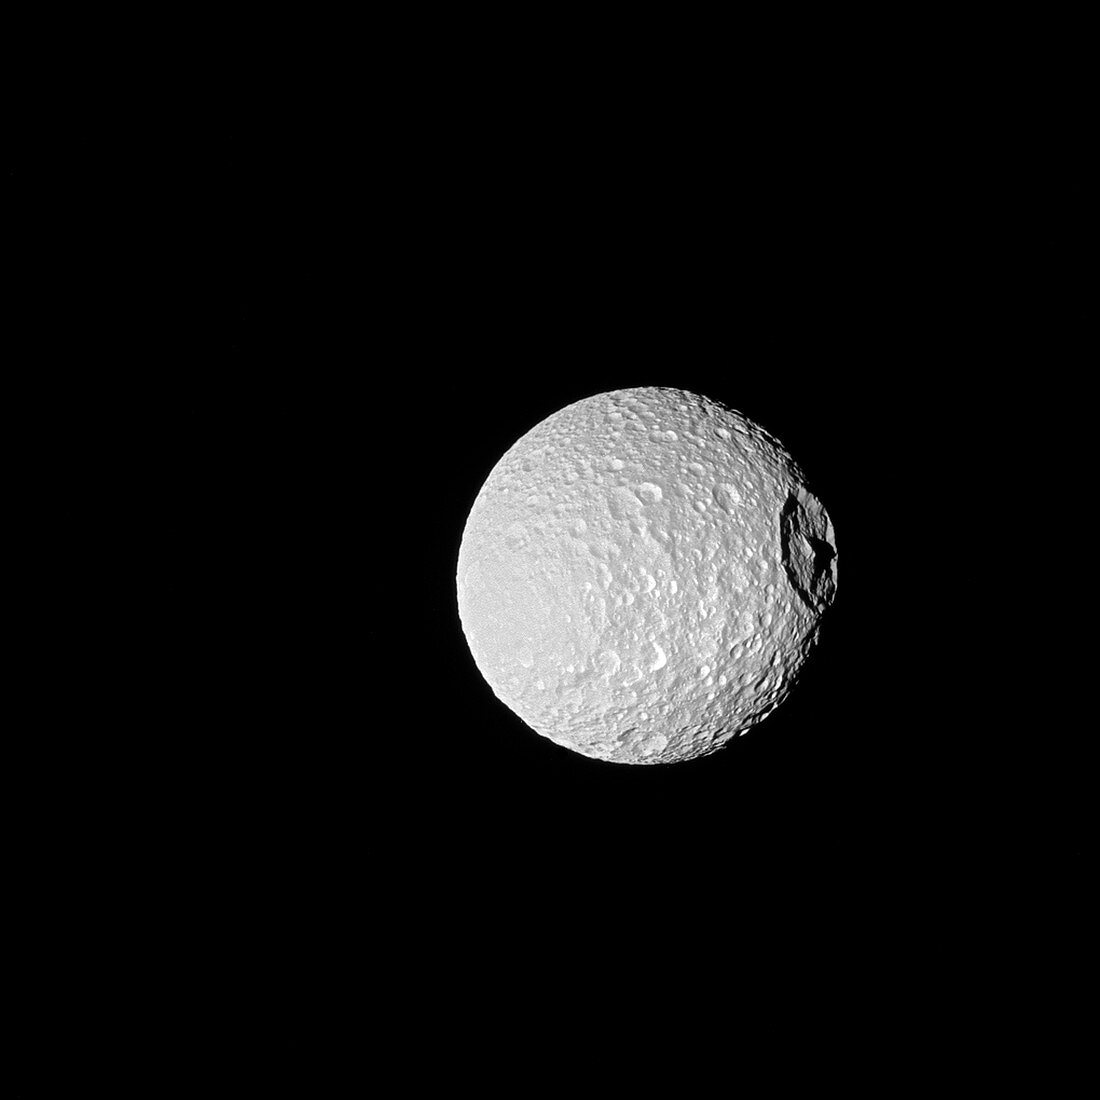 Saturn's moon Mimas, Cassini image